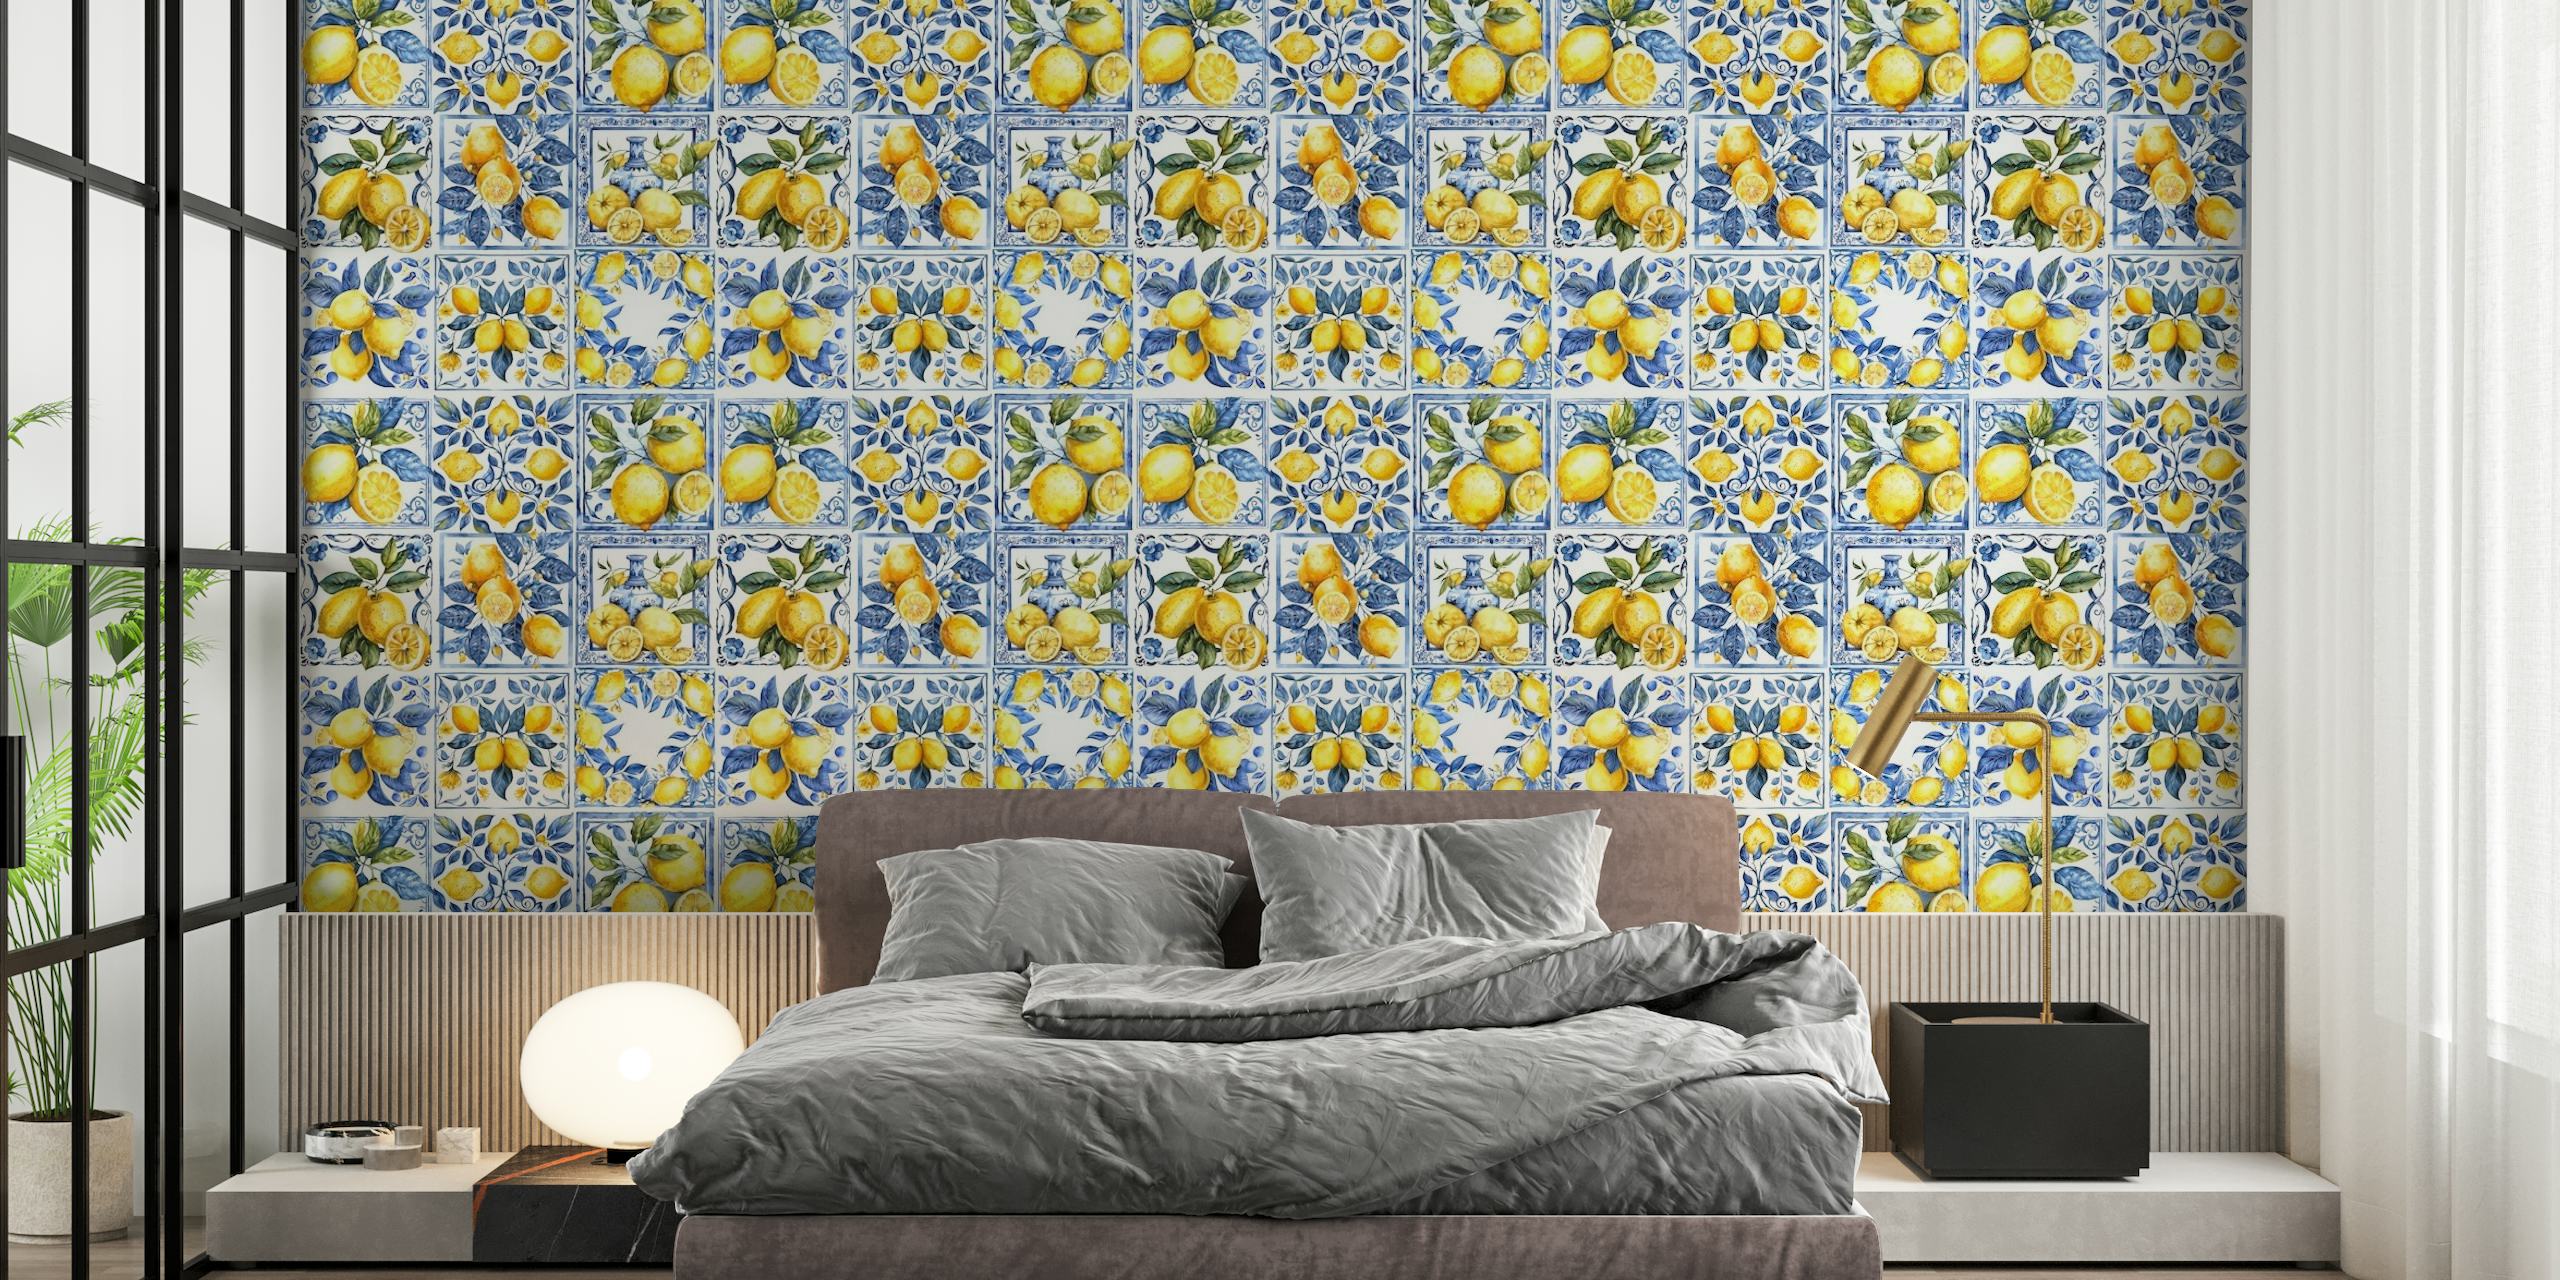 Mediterranean tiles with lemons mural ταπετσαρία